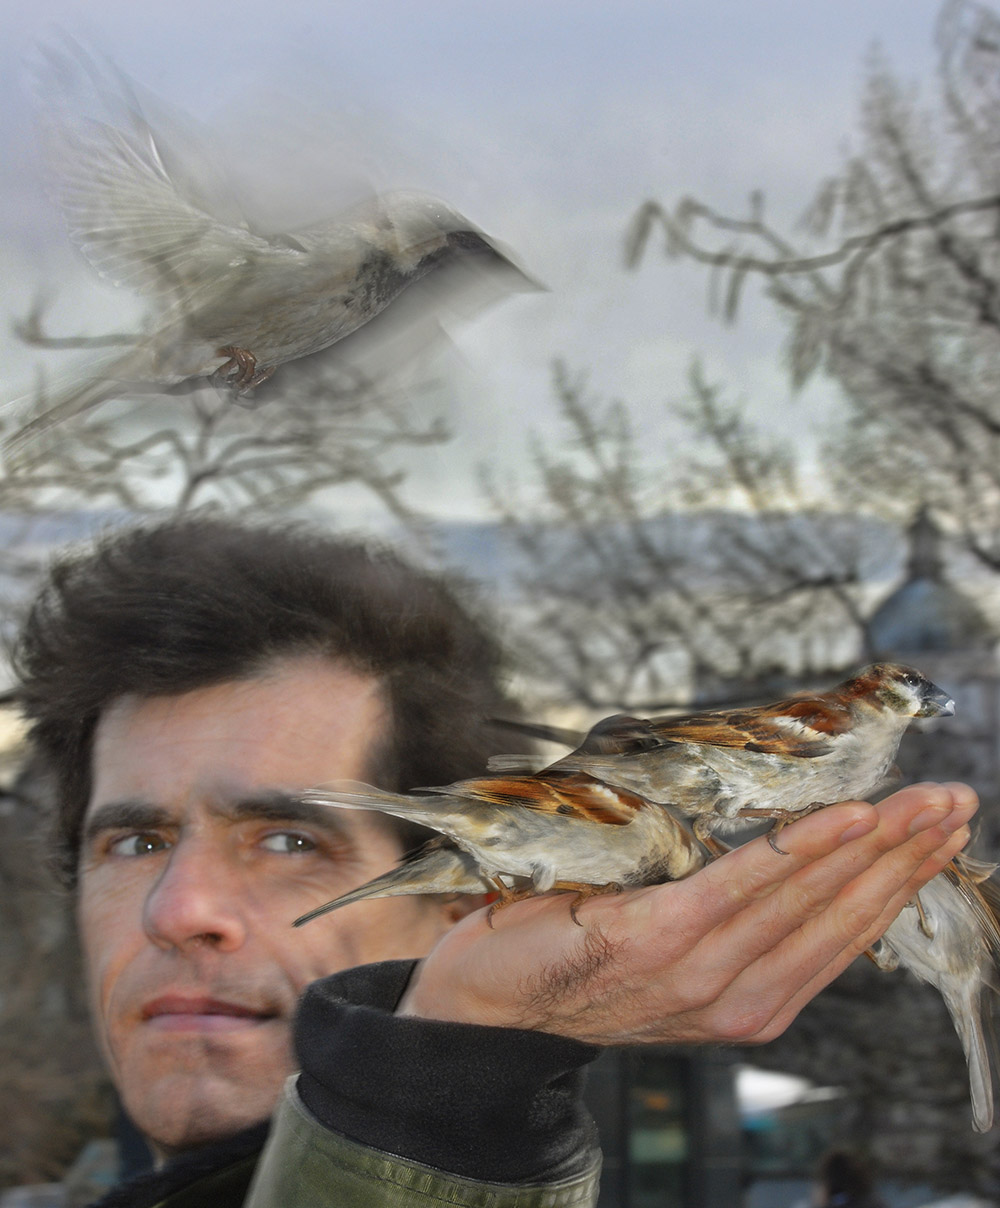 David Henry feeding sparrows in Paris.